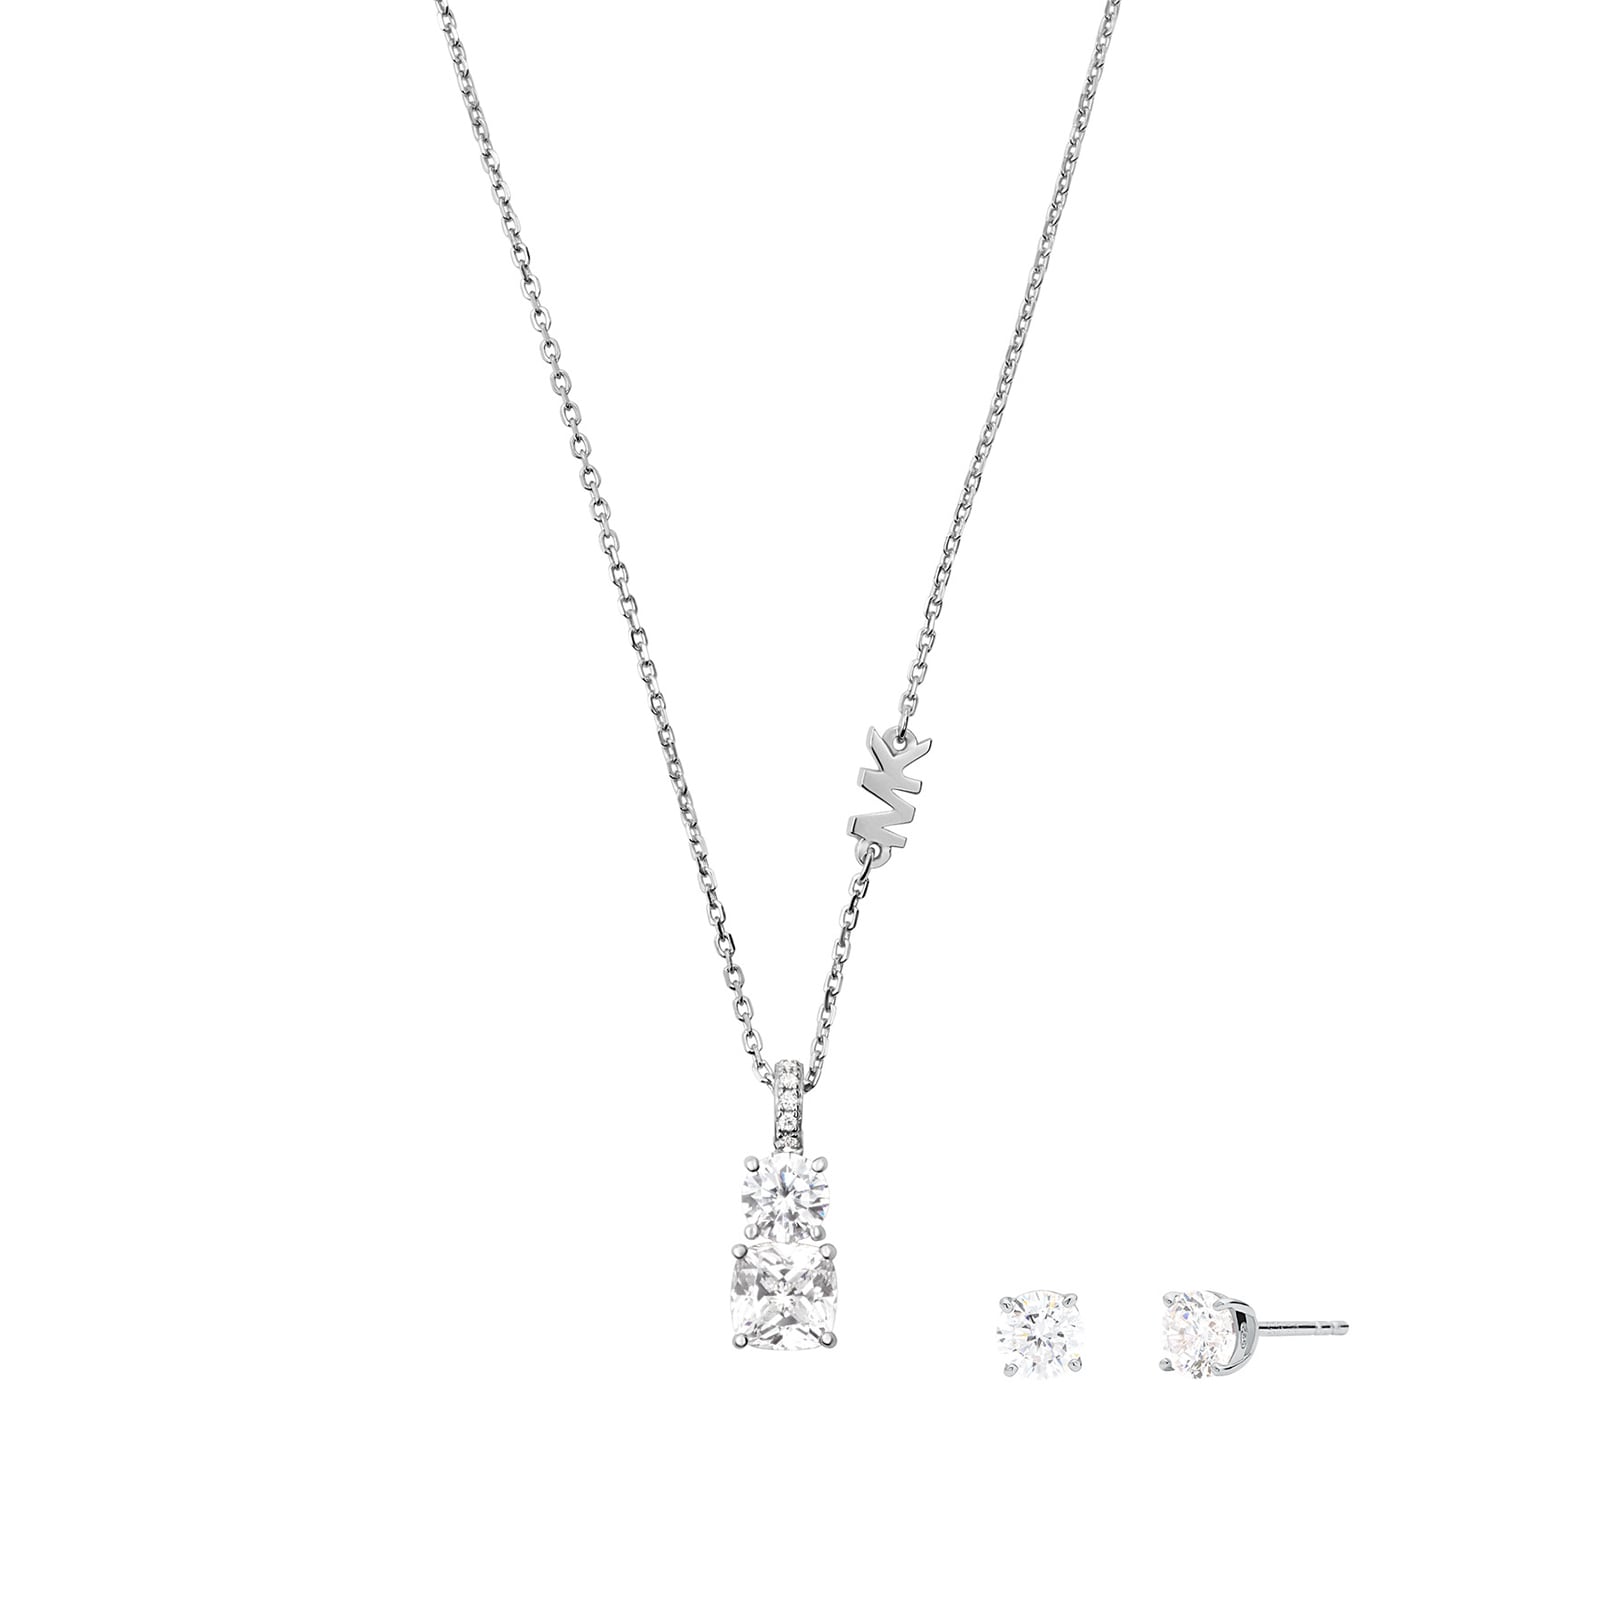 Silver Premium Crystal Pendant Necklace